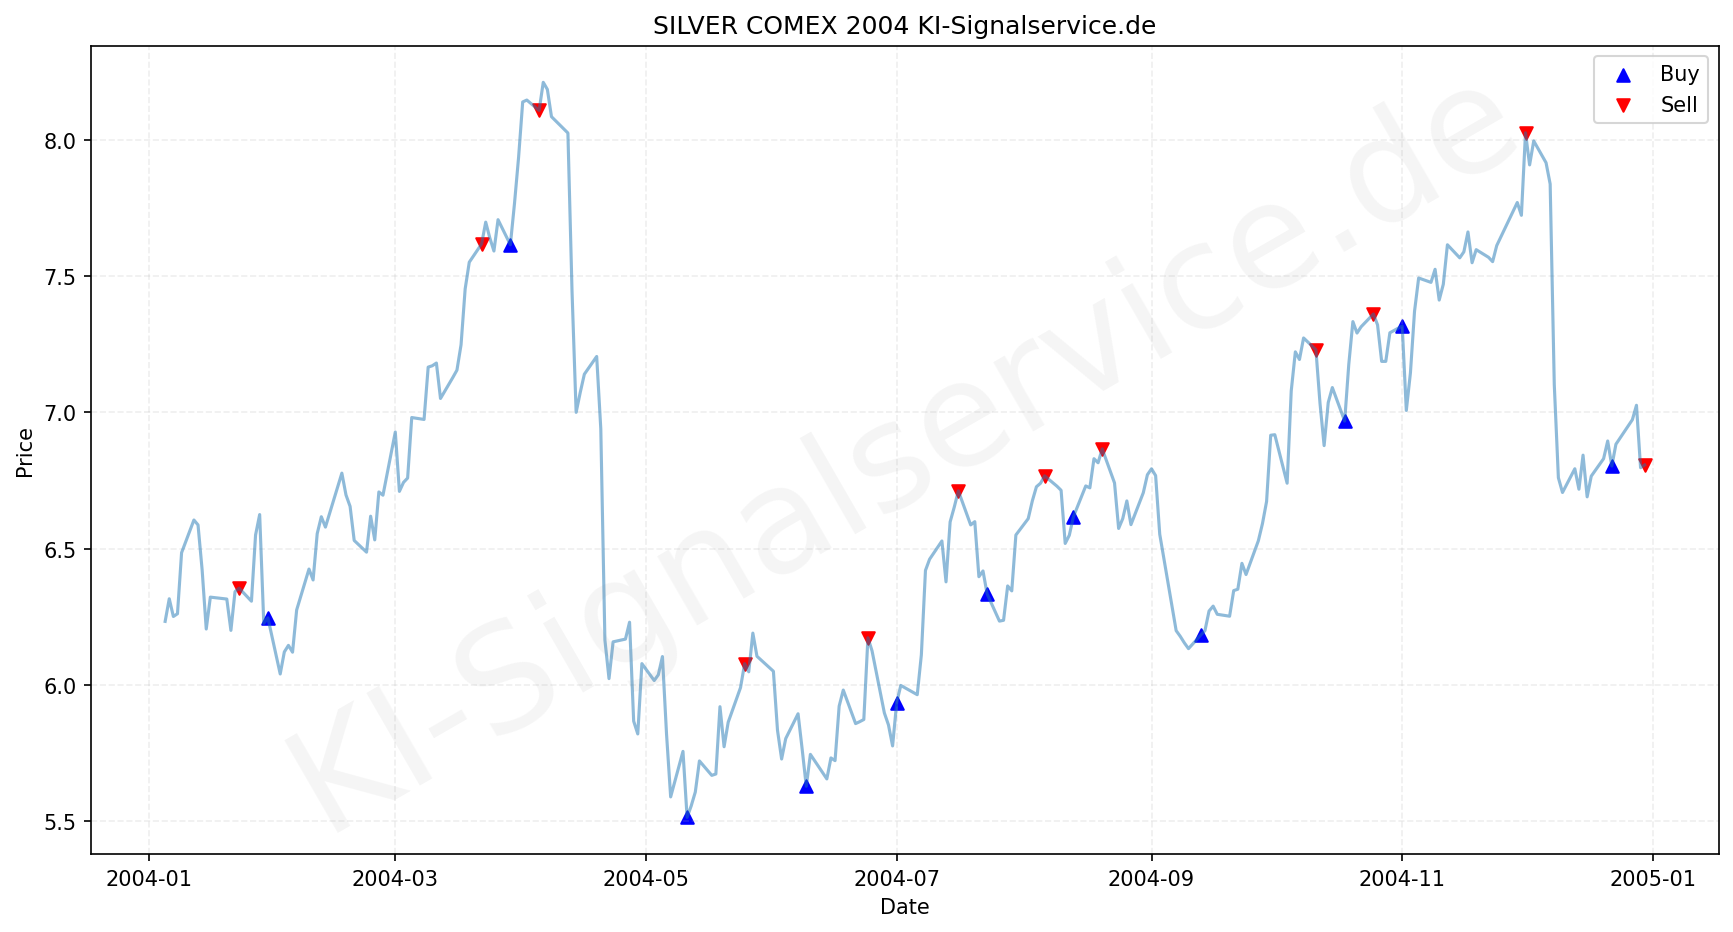 Silver Chart - KI Tradingsignale 2004